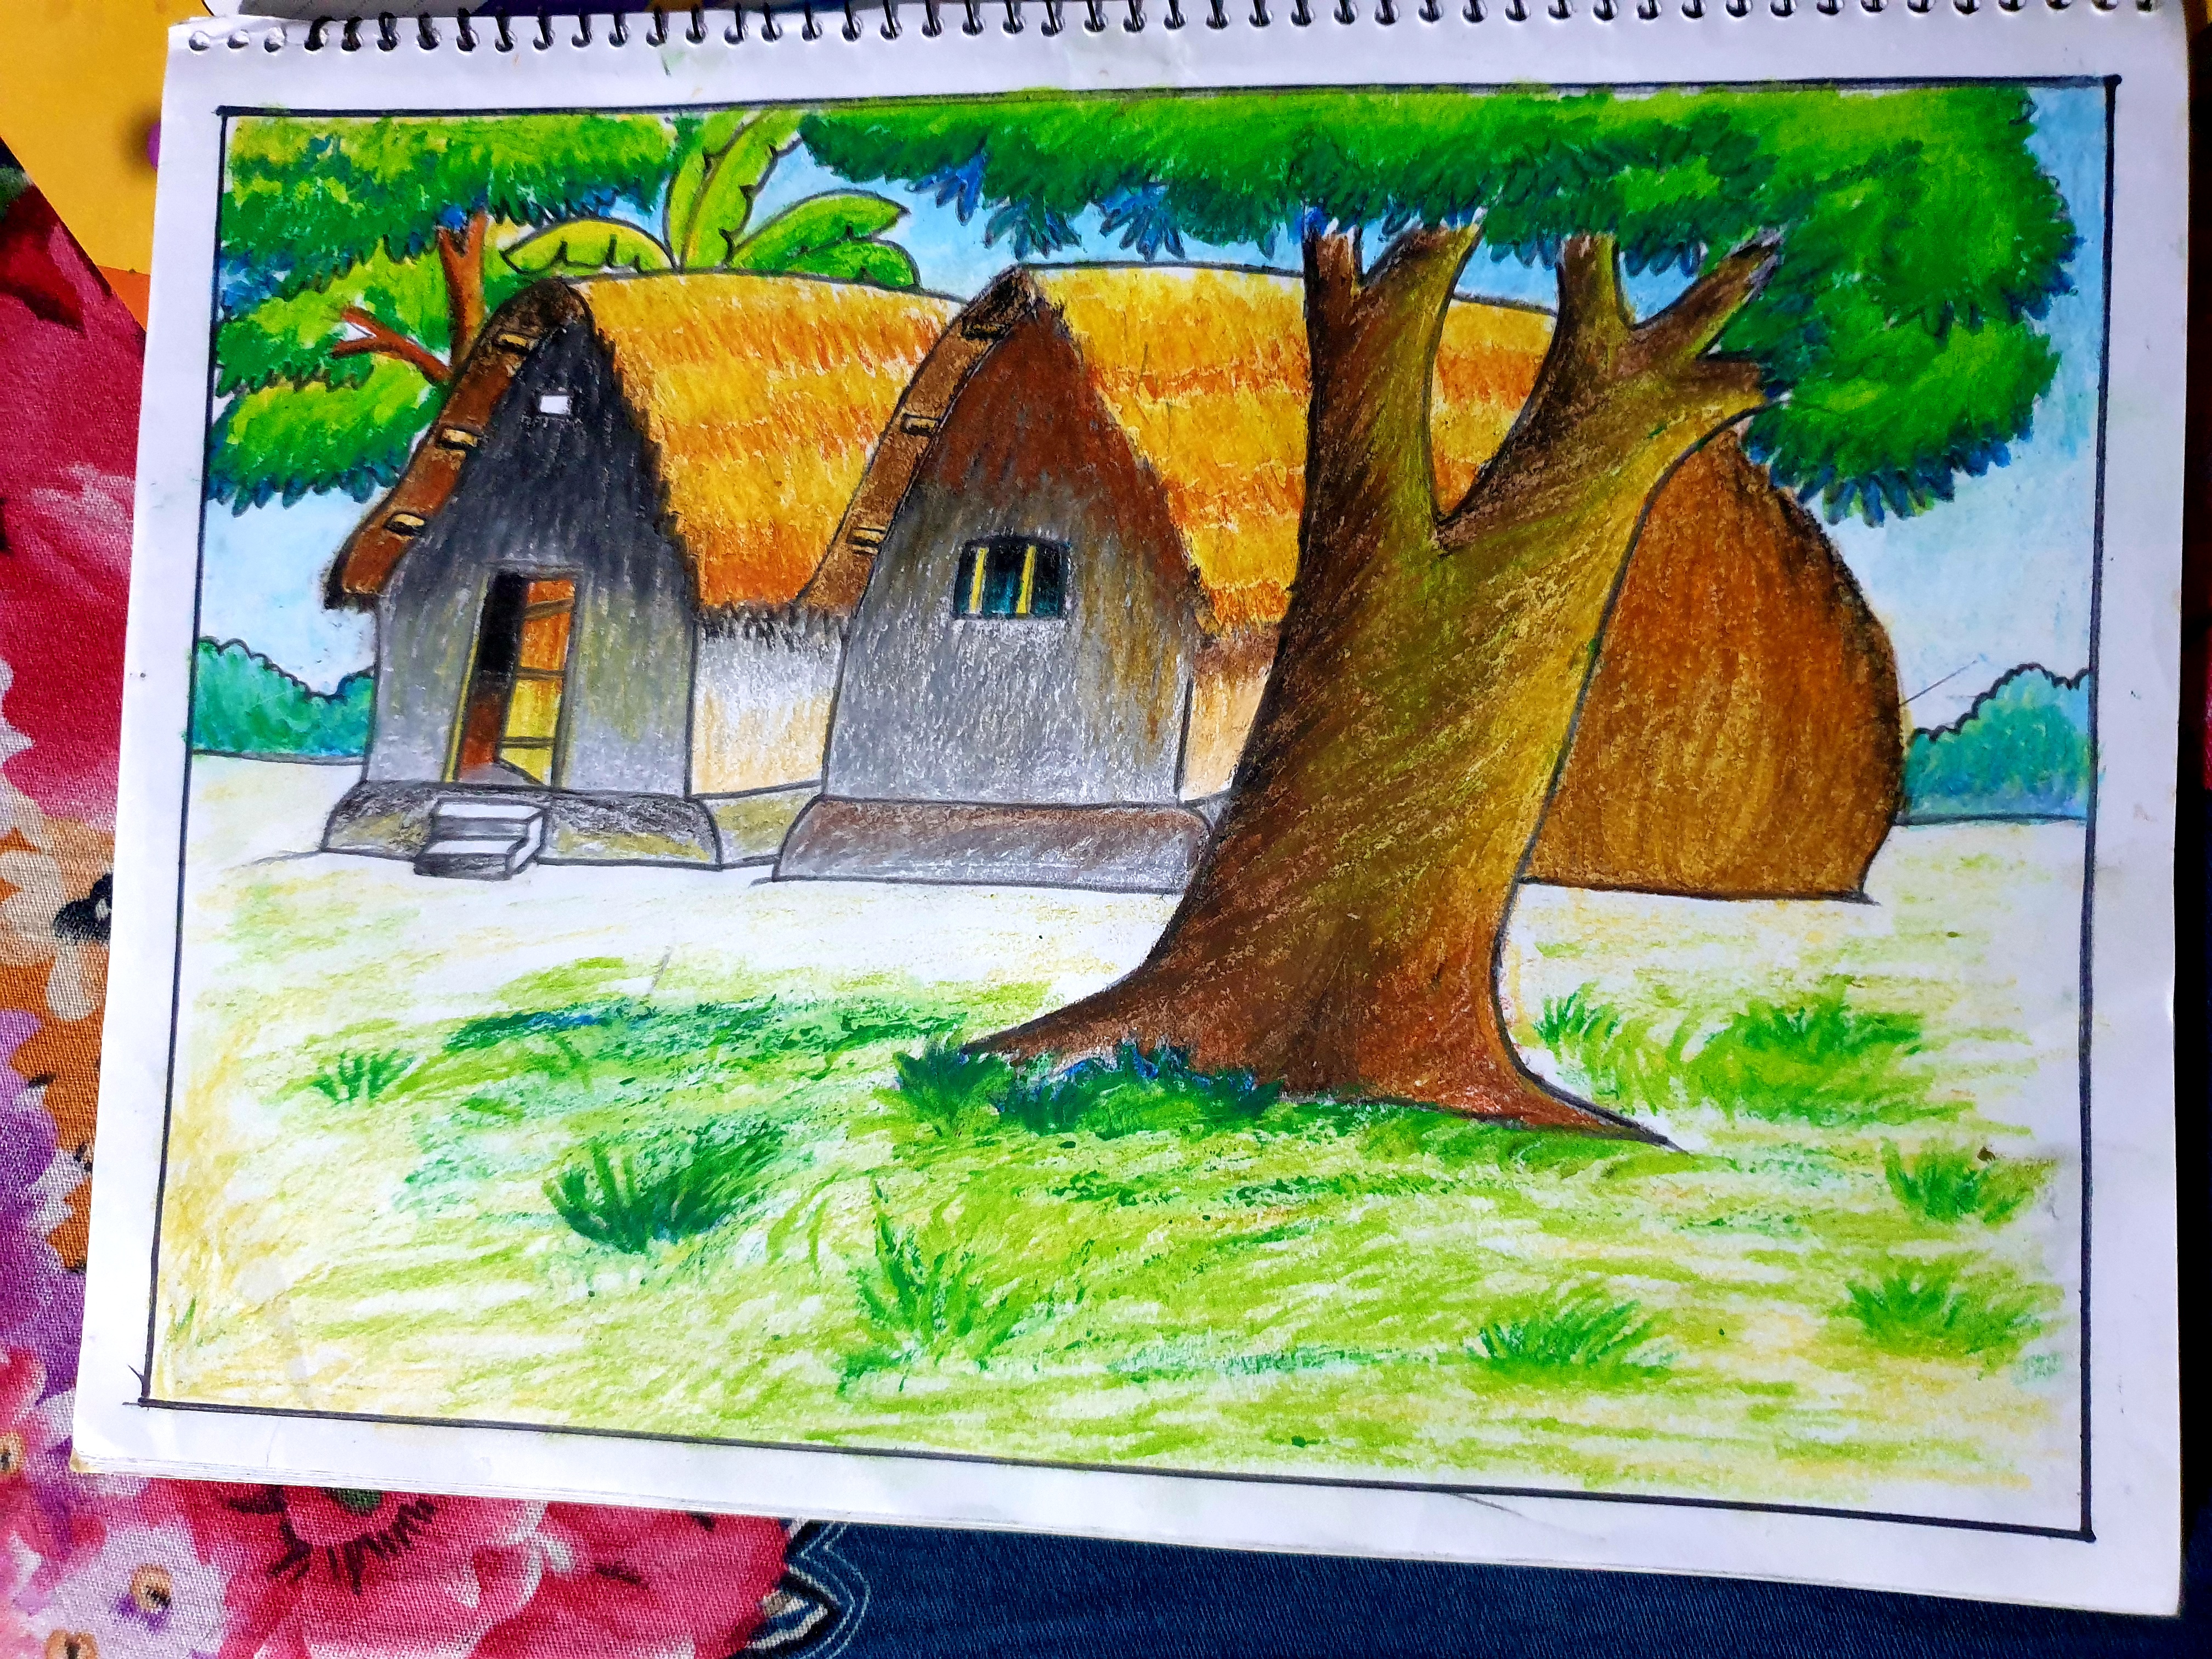 pencil sketch on paper of a fantasy hut